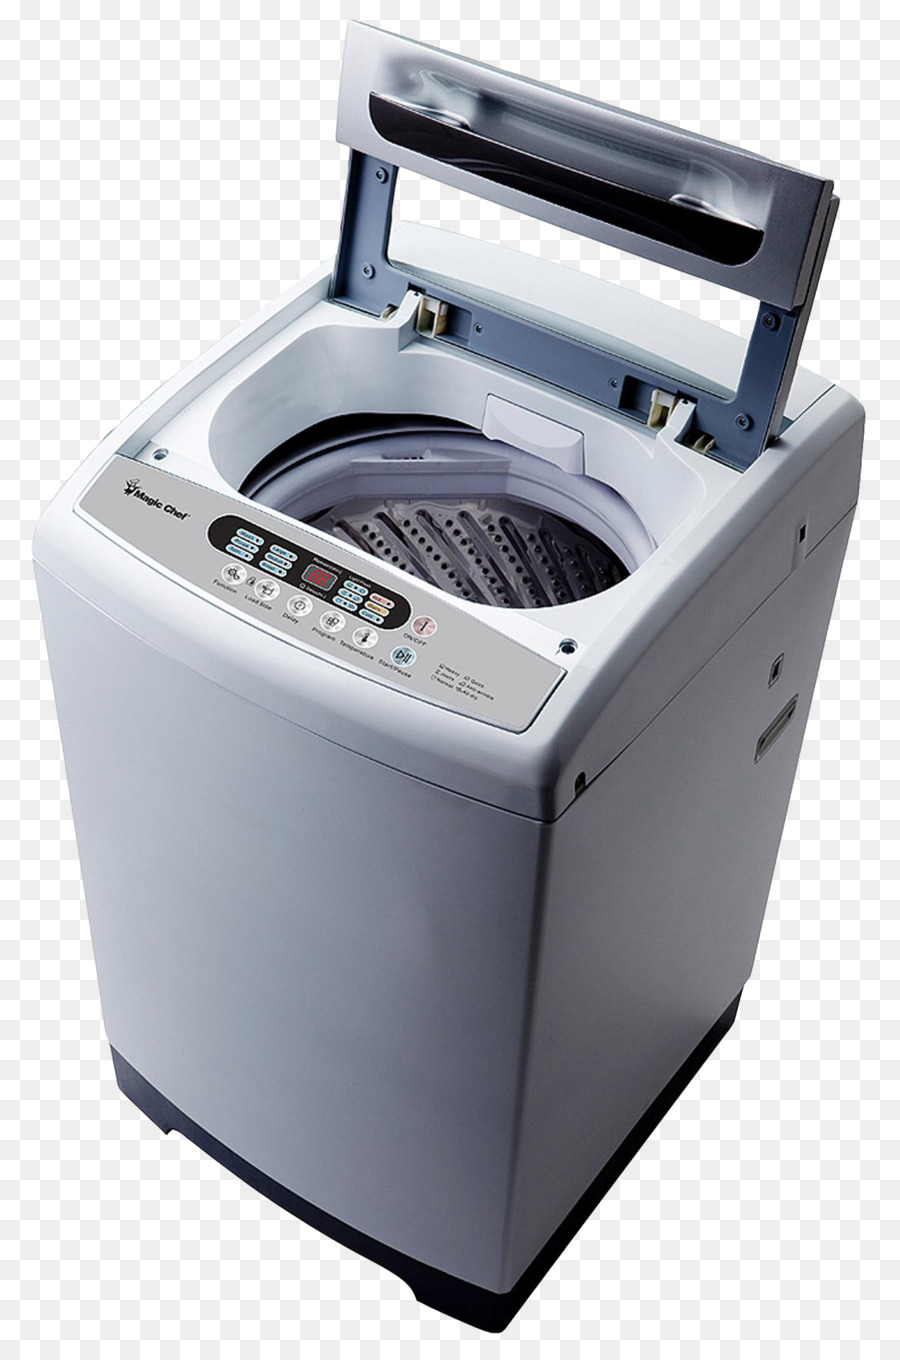 Máy giặt Ma thuật đầu Bếp Combo máy sấy máy giặt quần Áo máy sấy - máy giặt